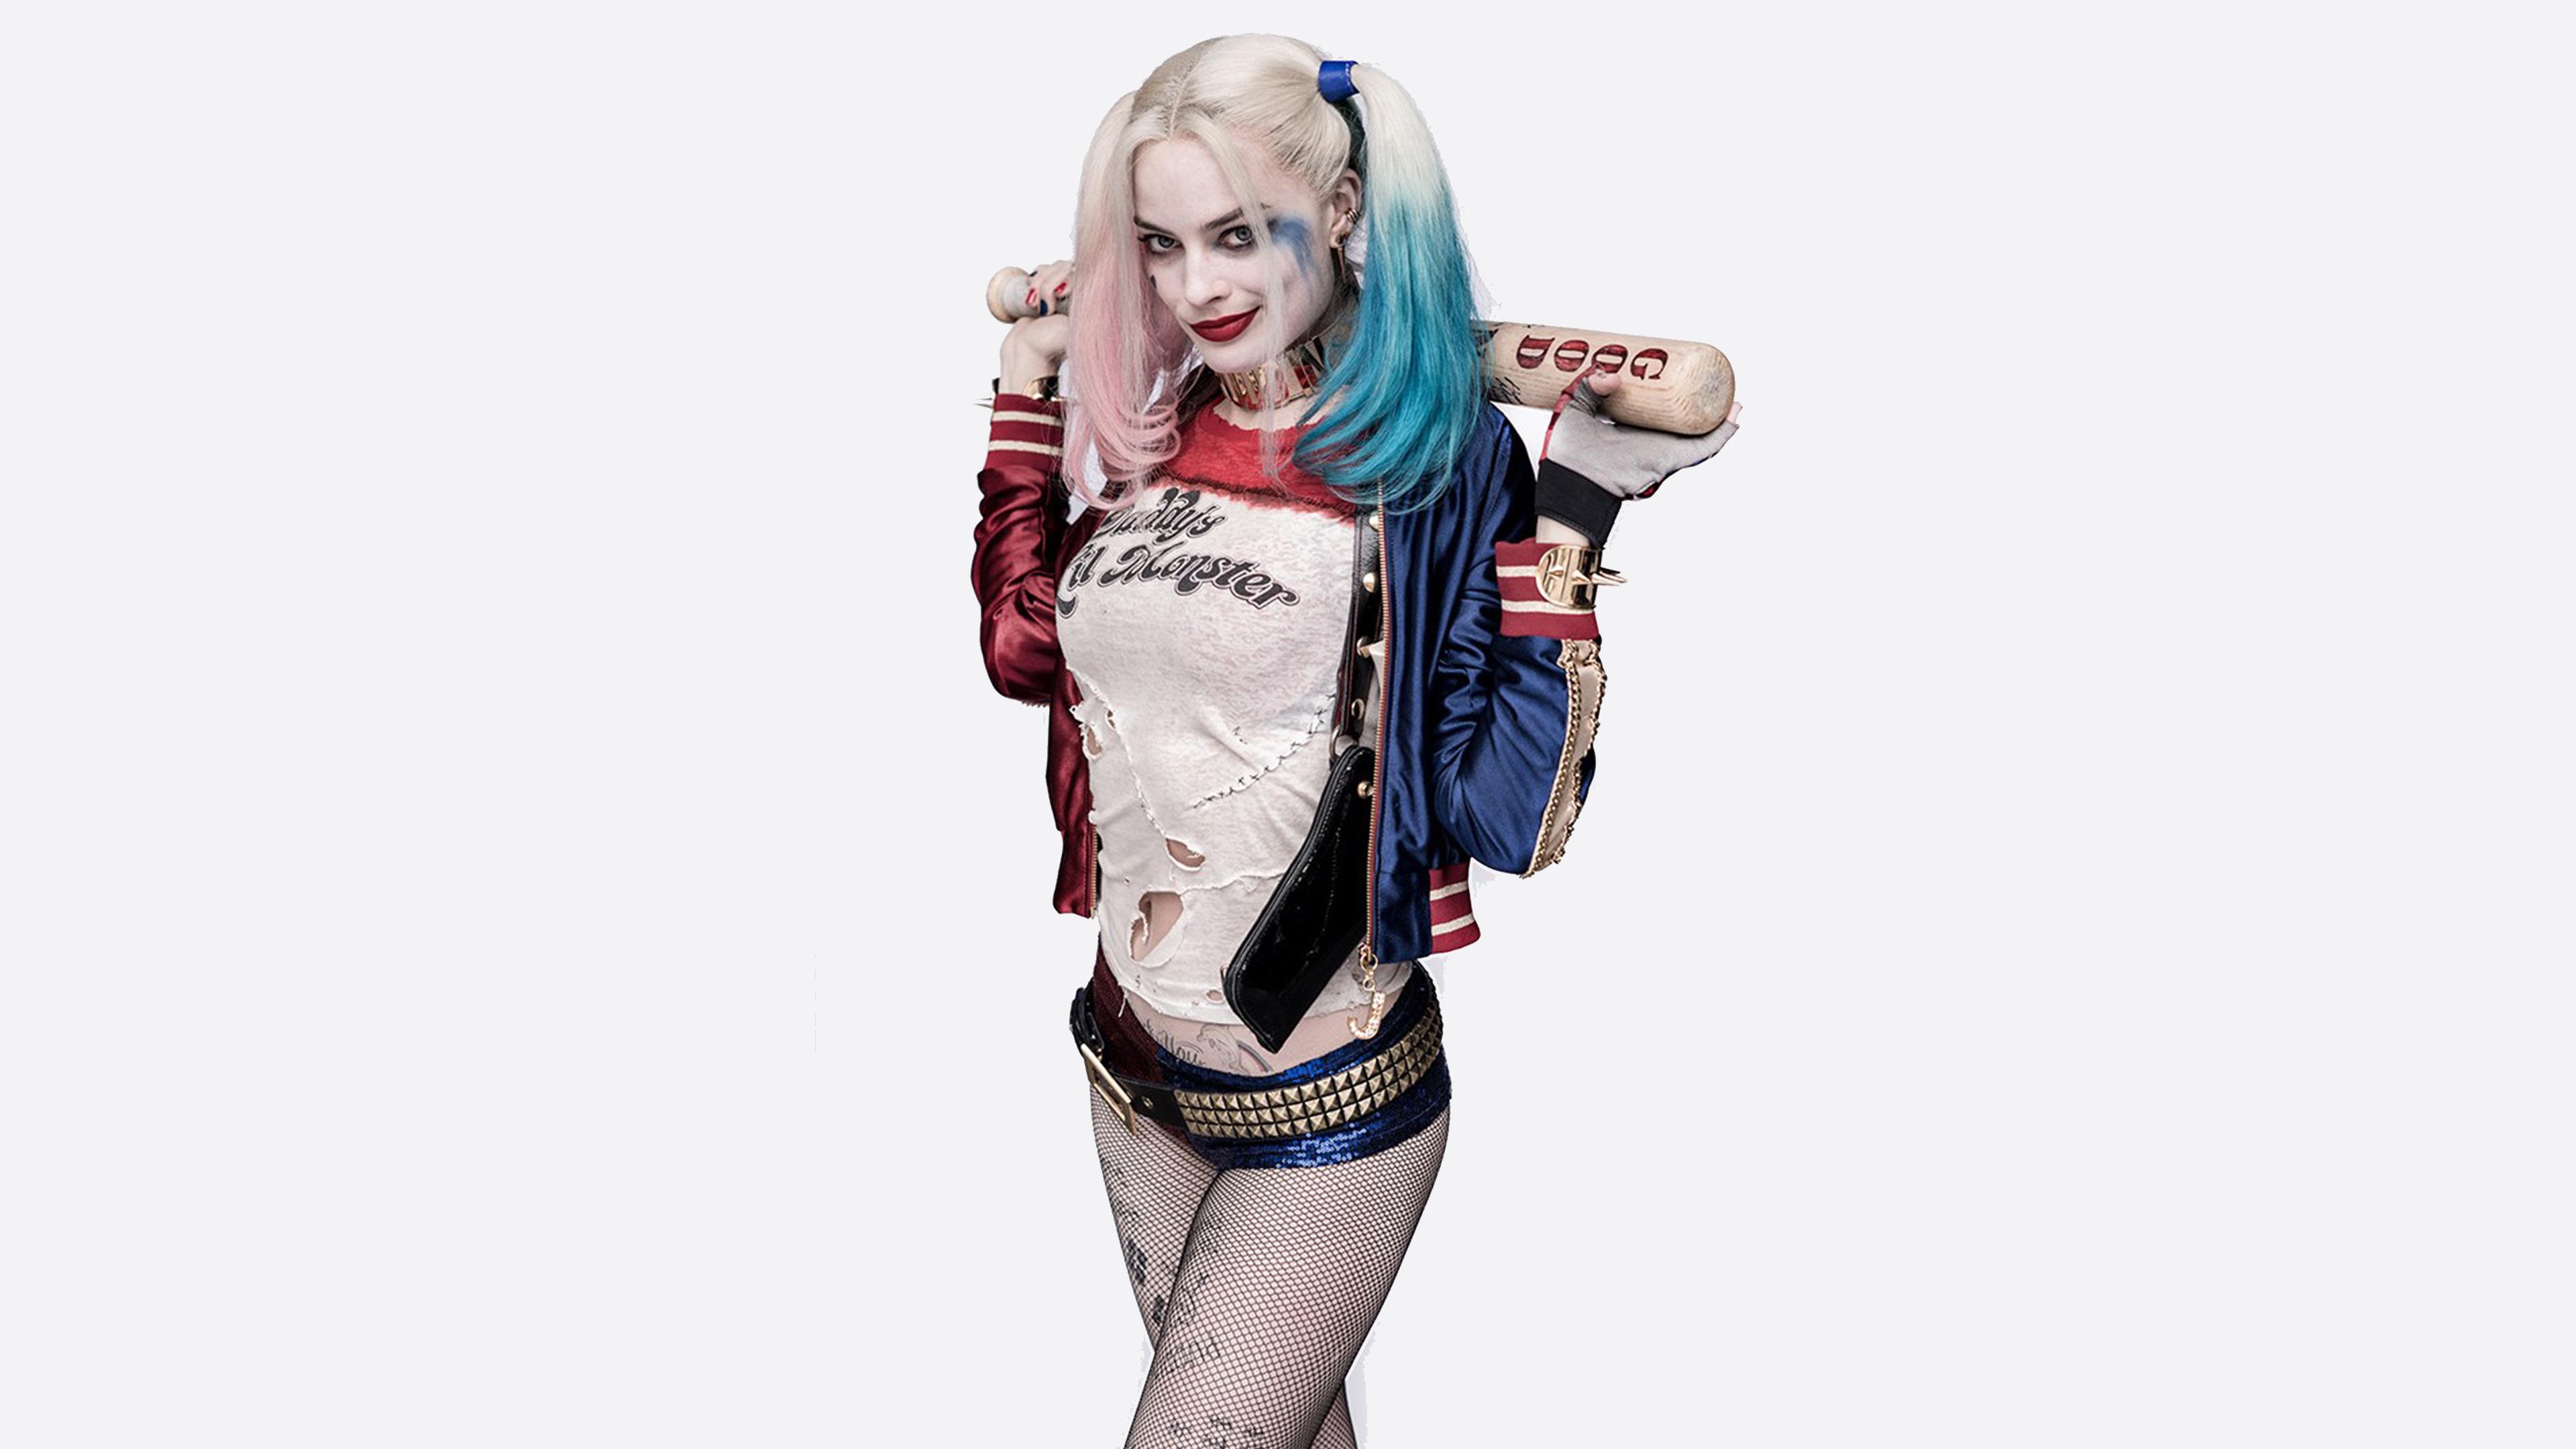 Wallpaper 4k Harley Quinn Costume 2016 movies wallpaper, 4k